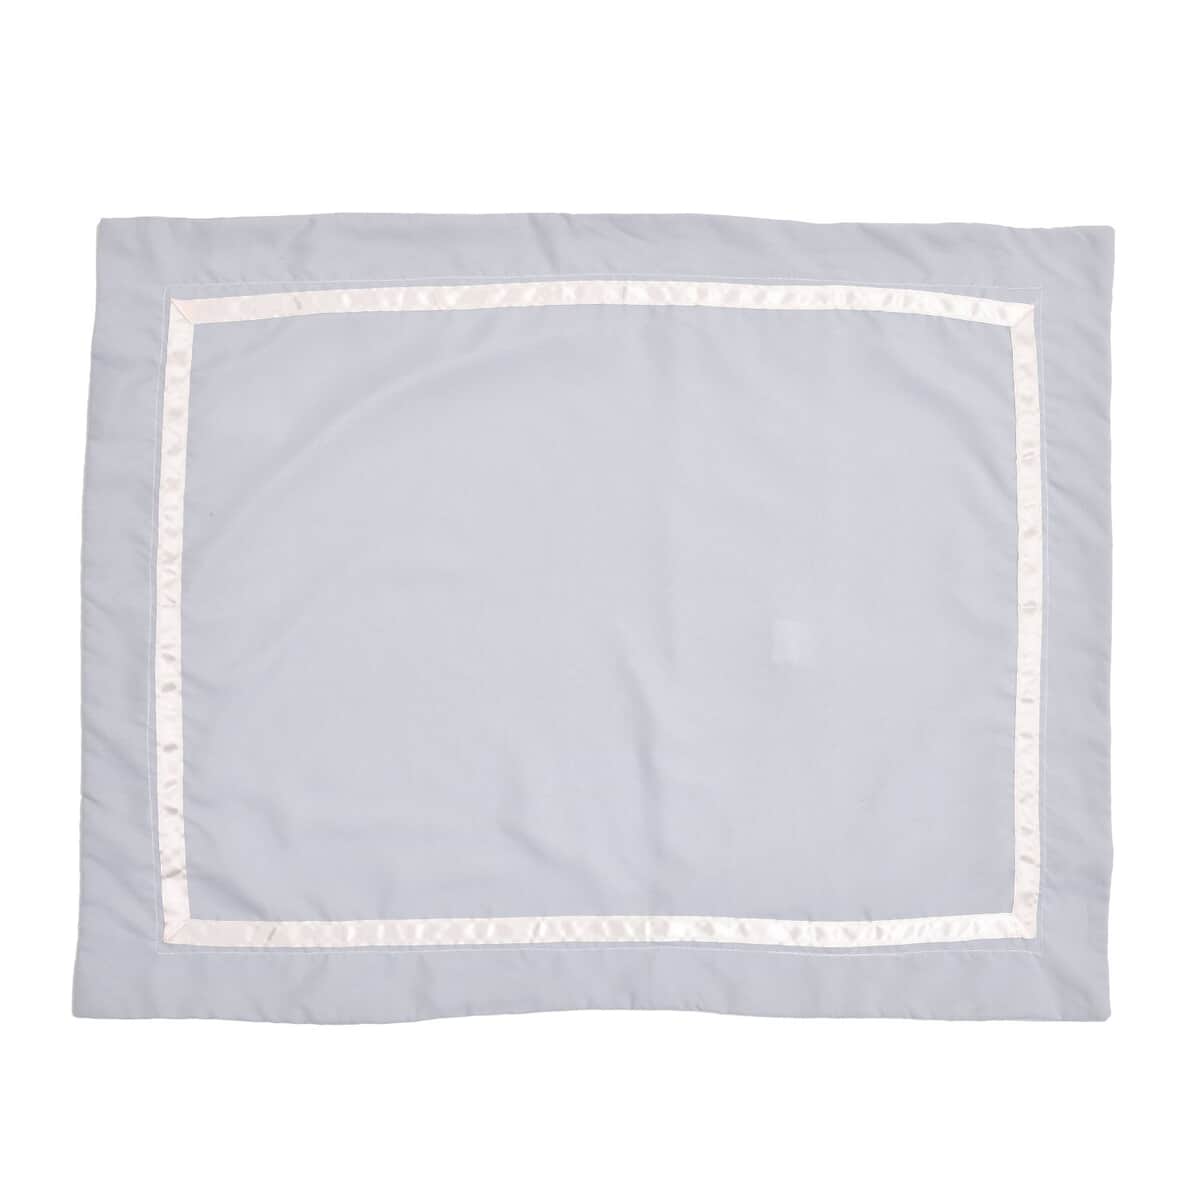 Homesmart Gray Quilted Pattern Microfiber 3pcs Comforter Set - Queen image number 5